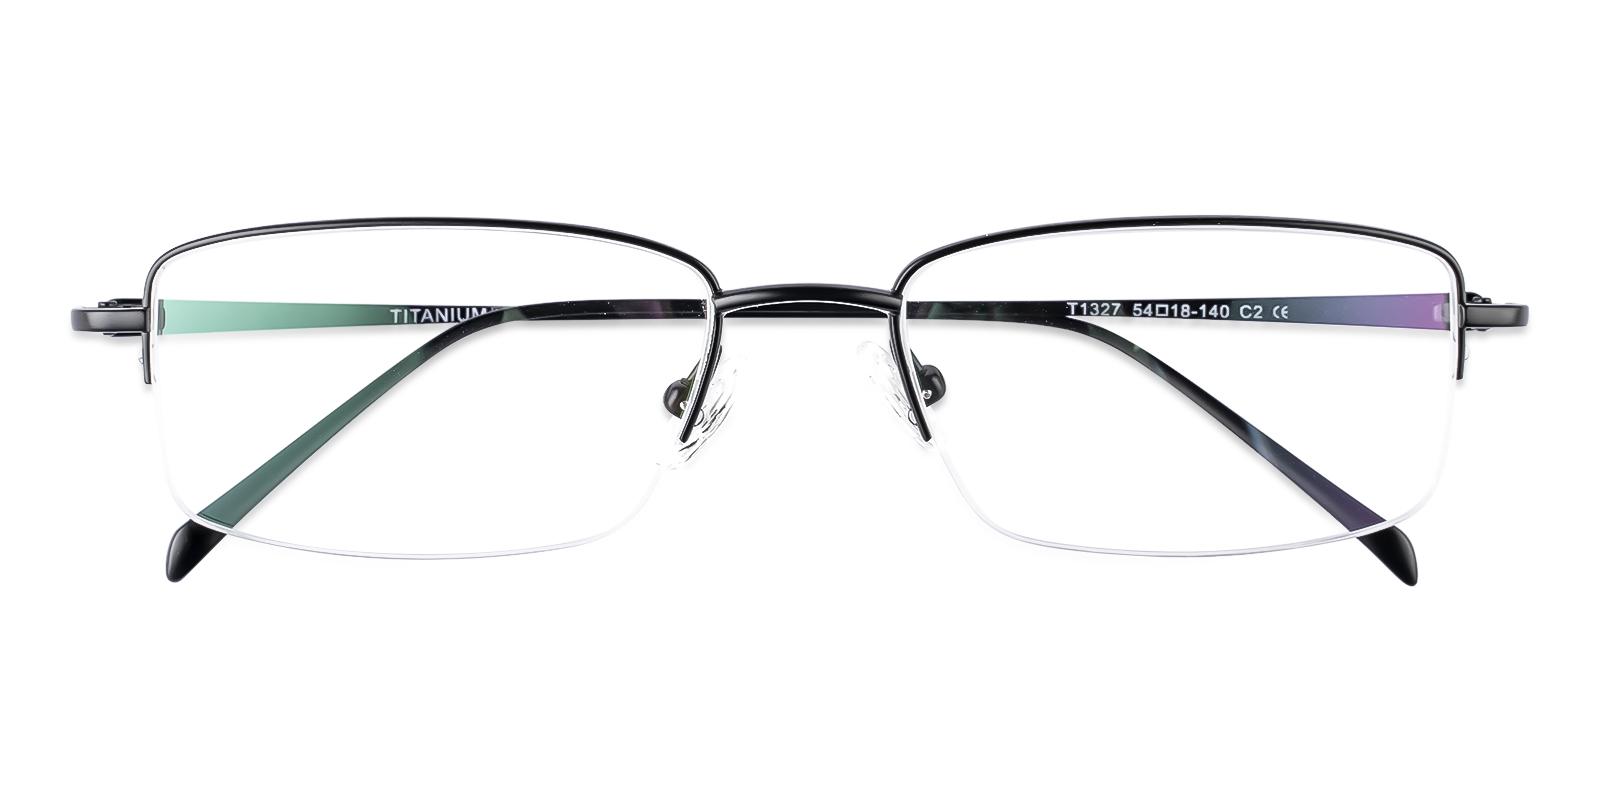 Pinia Black Titanium Eyeglasses , NosePads Frames from ABBE Glasses